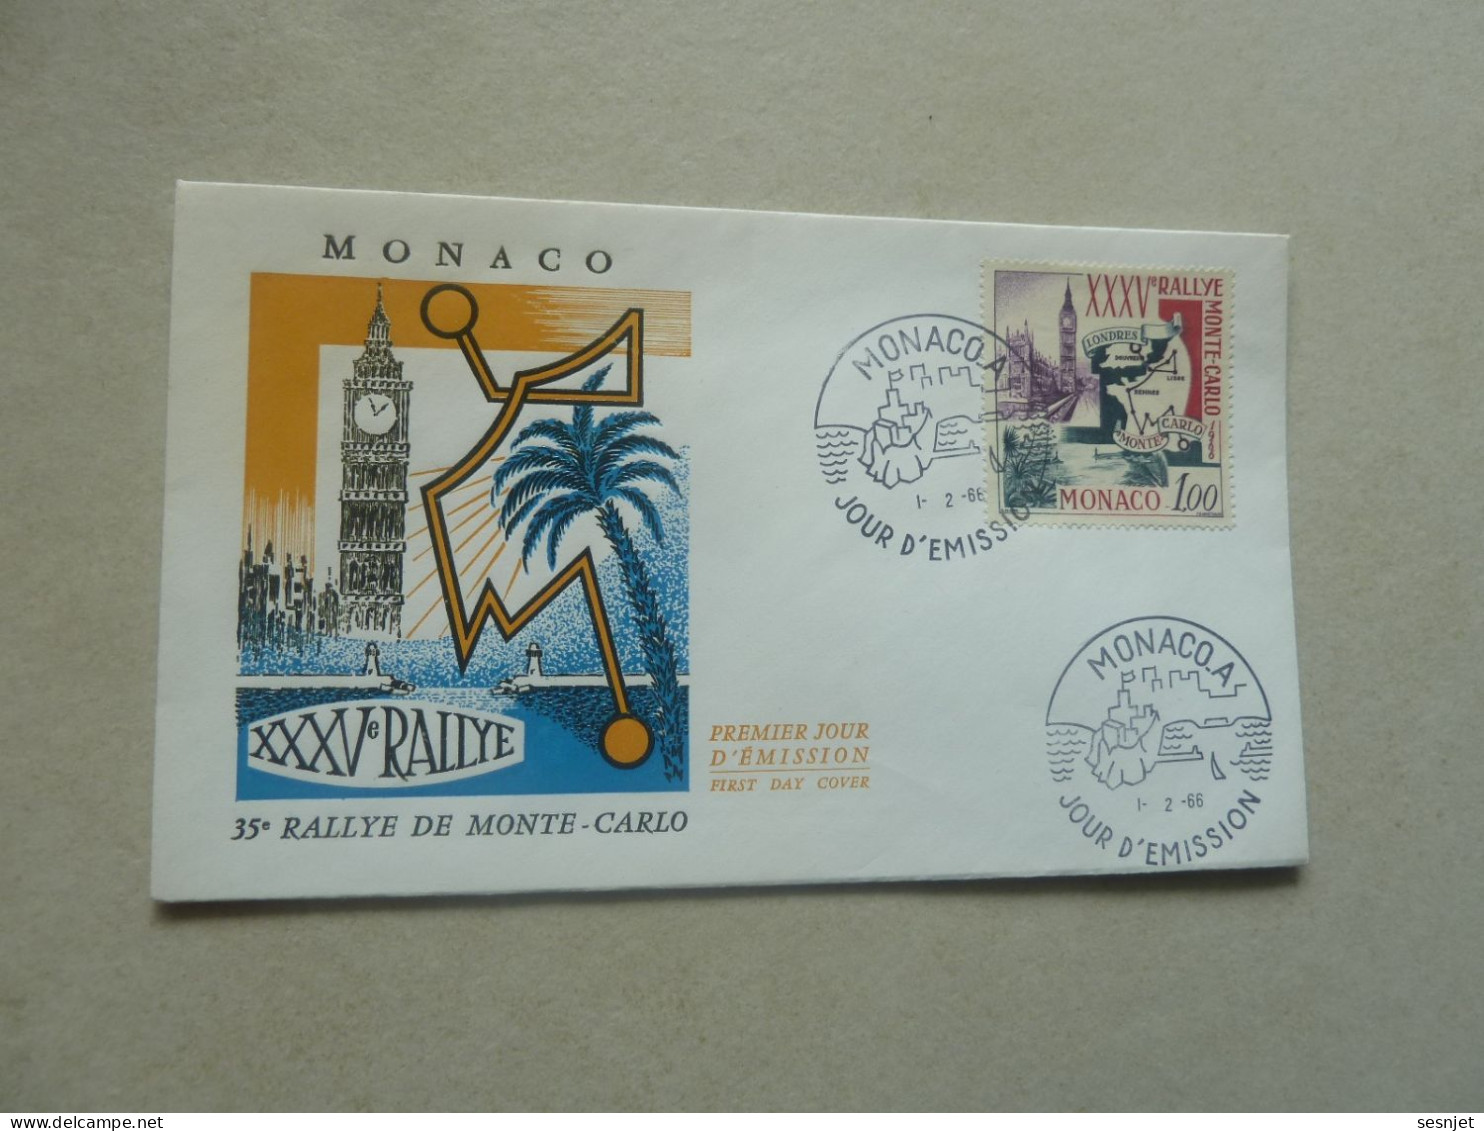 Monaco - Xxvème Rallye - 1f.00 - Yt 689 - Enveloppe Premier Jour D'Emission - Année 1966 - - FDC